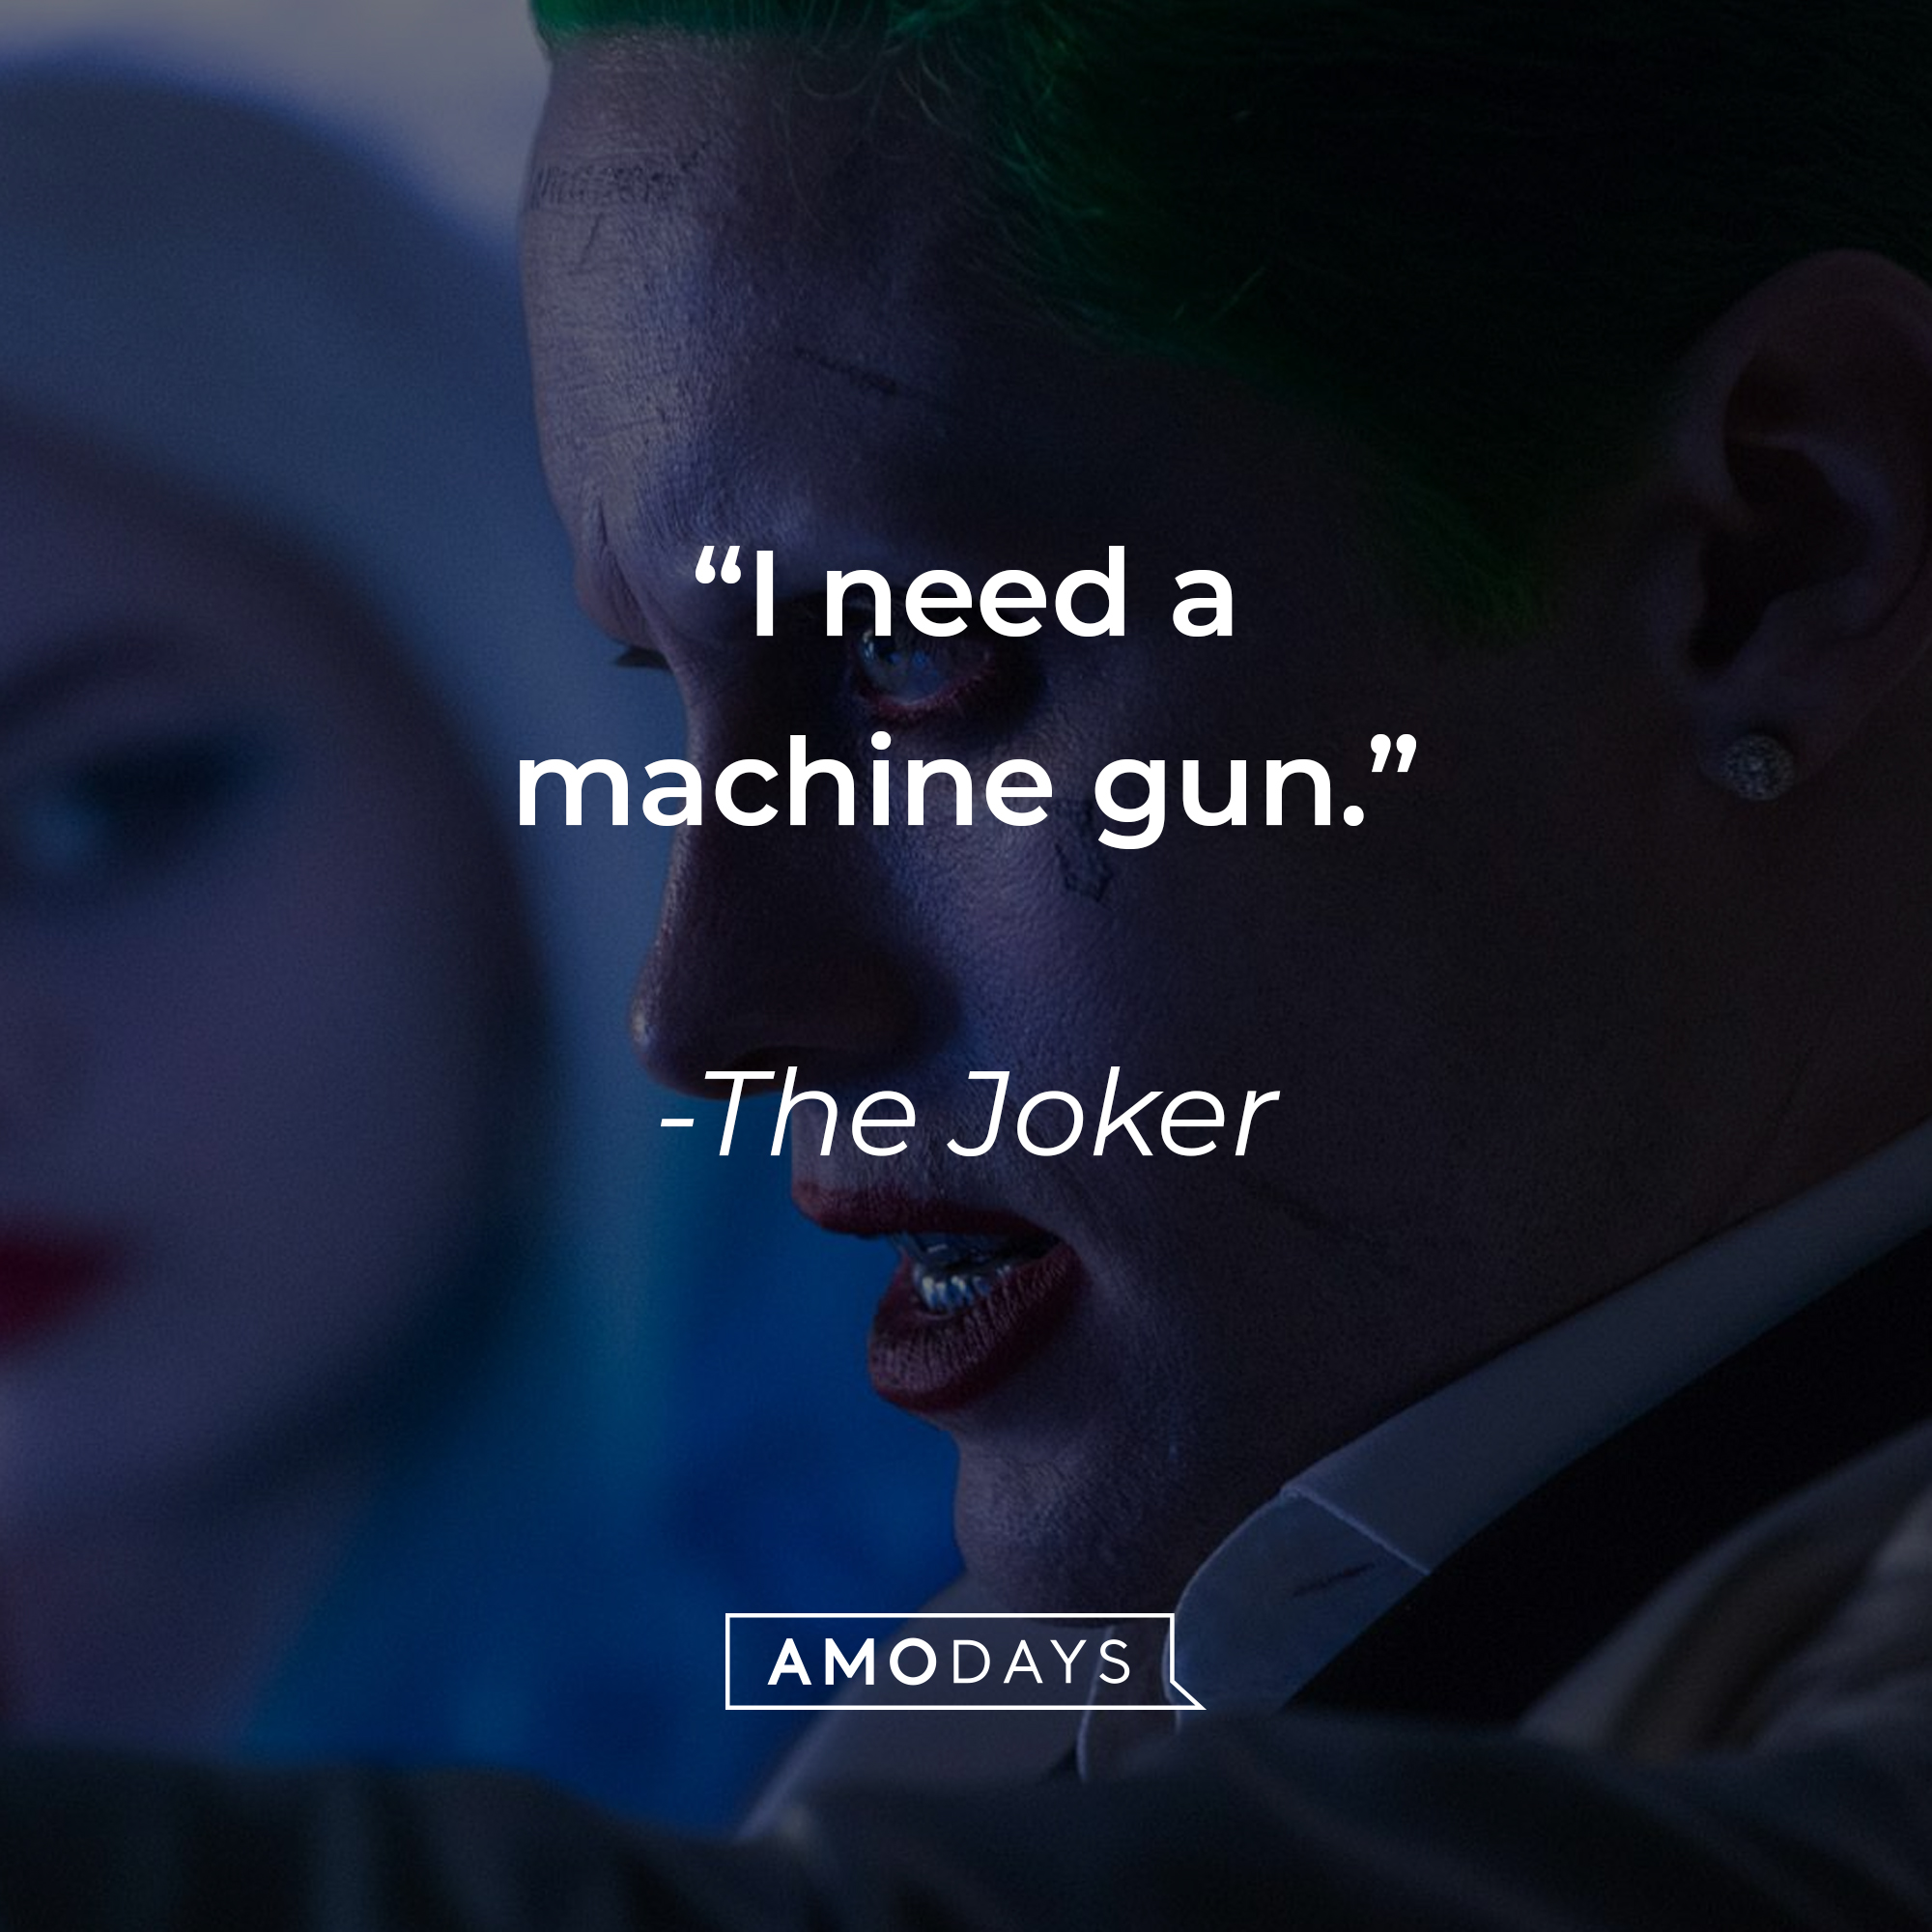 The Joker's quote: "I need a machine gun." | Source: facebook.com/thesuicidesquad